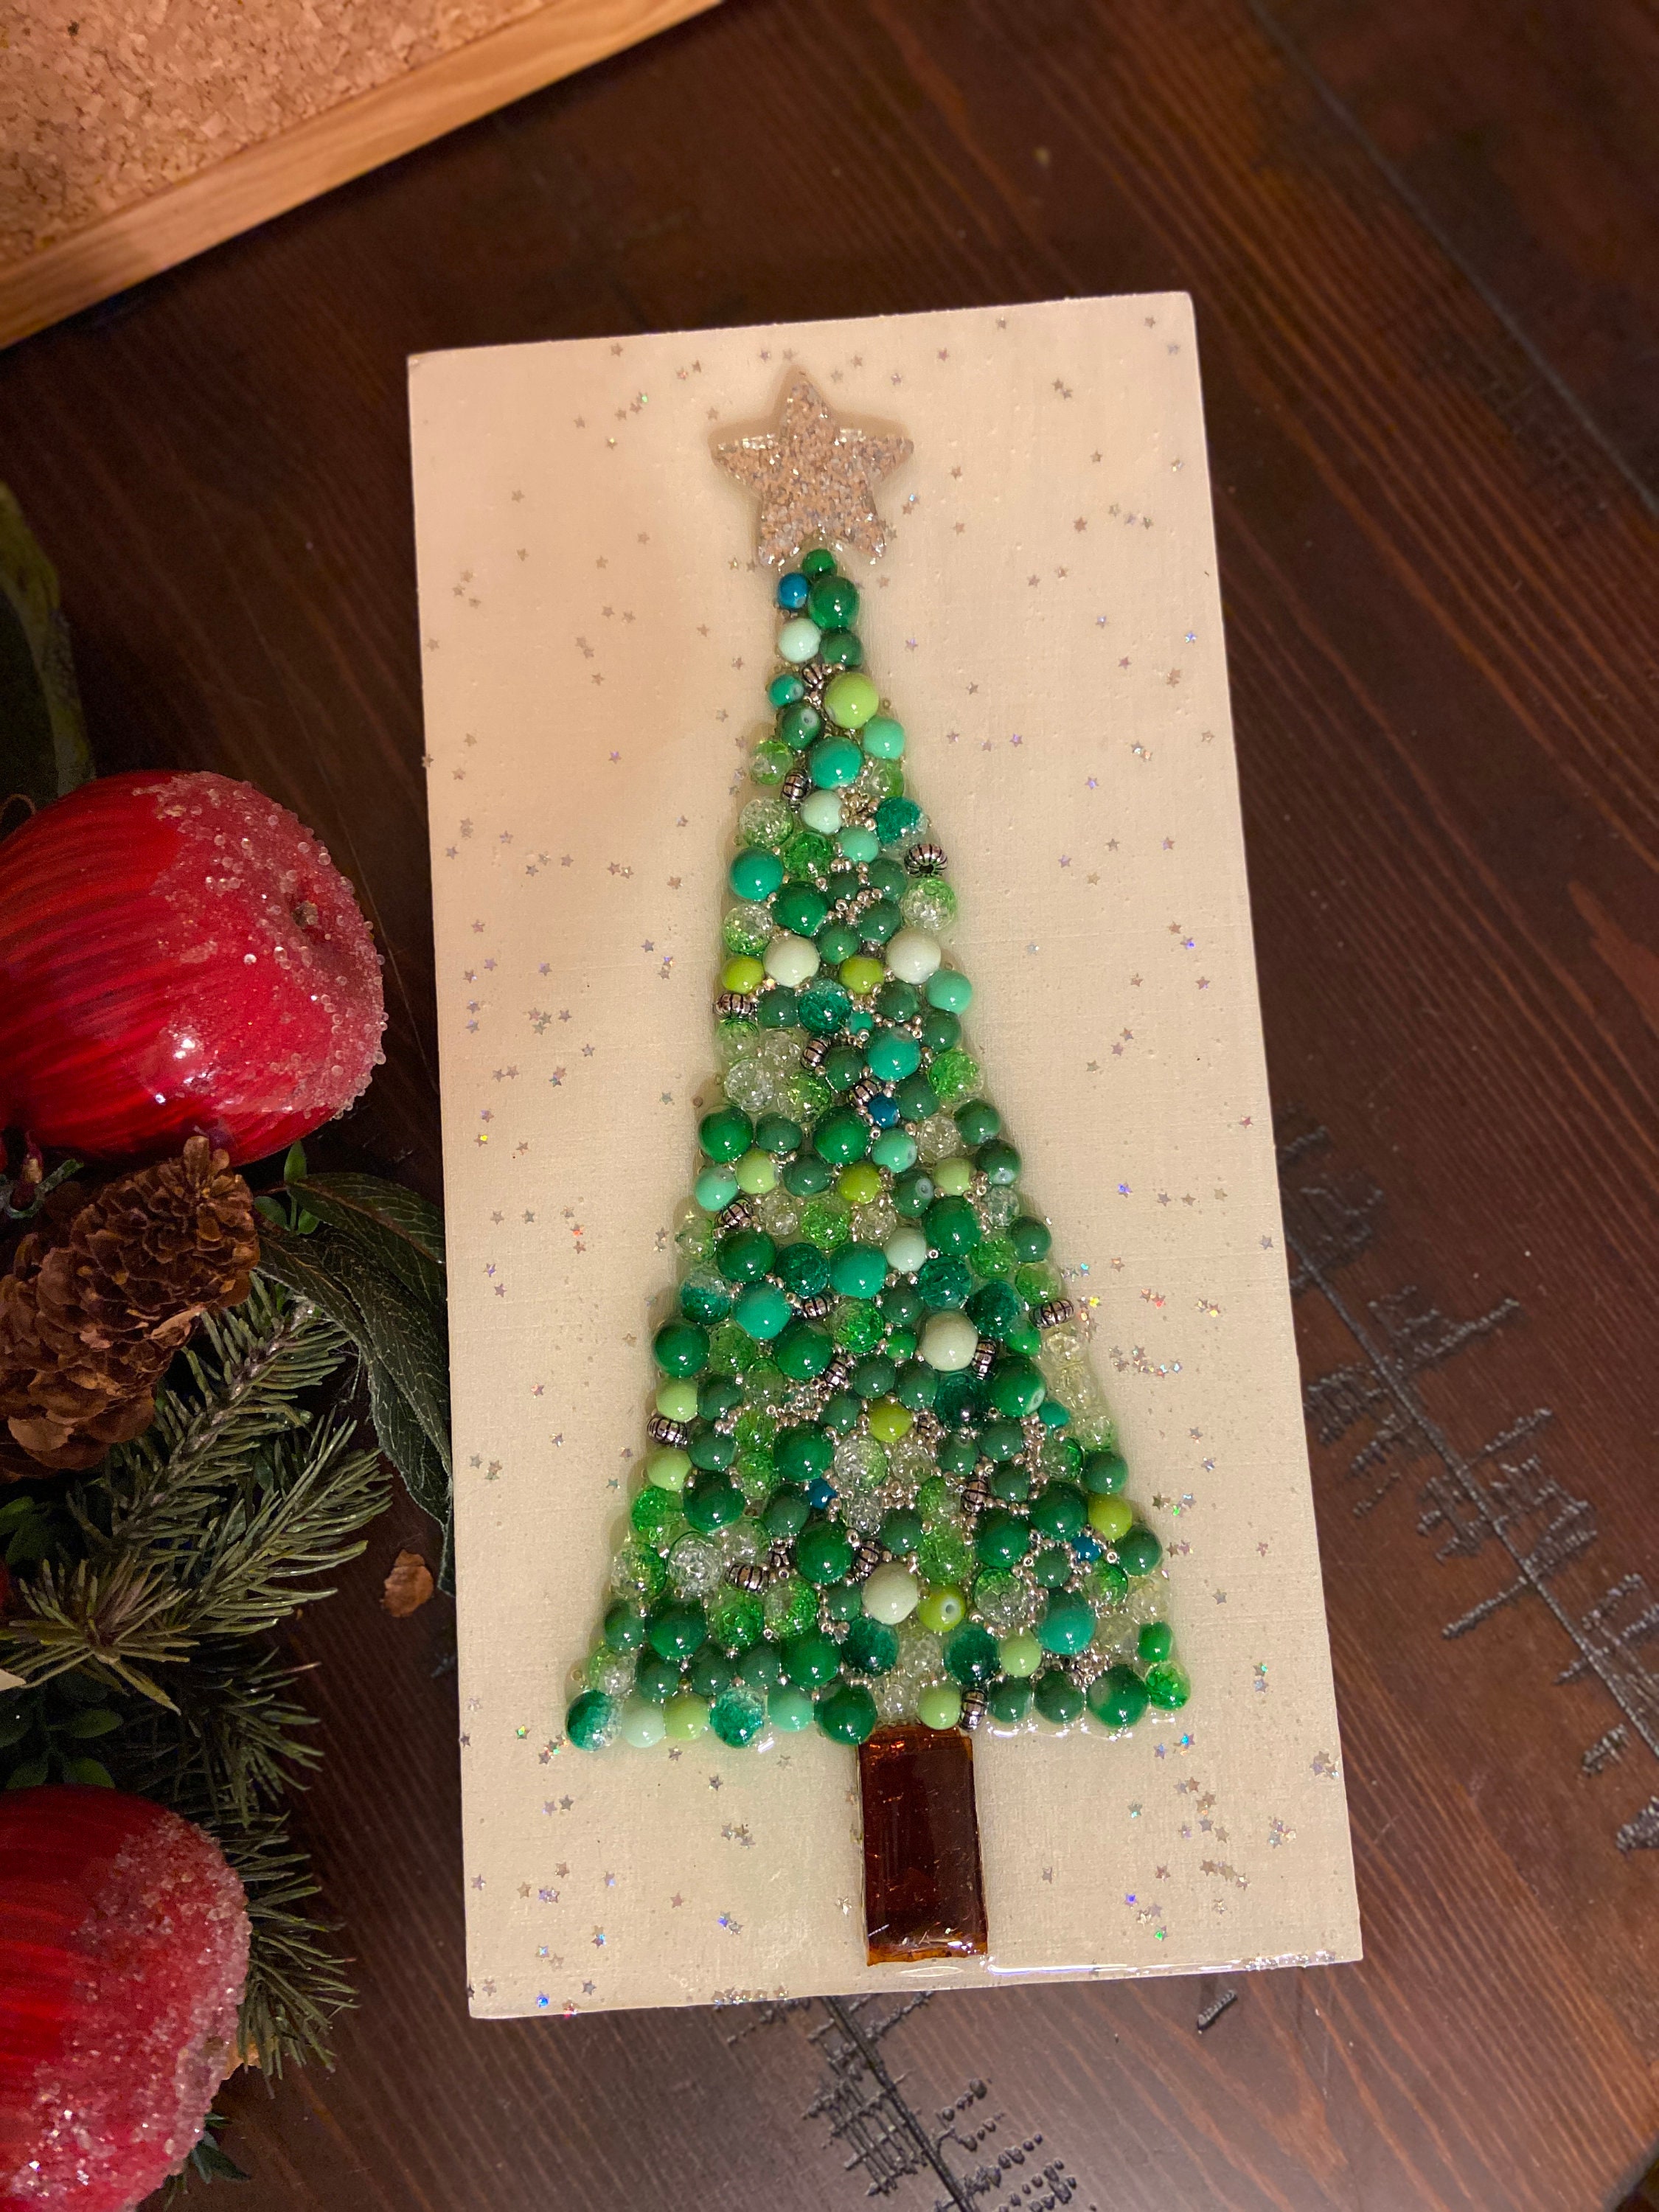 30x34mm Acrylic Christmas Tree Beads, With Glitter, Colorful for Christmas,  Xmas Tree Bead 